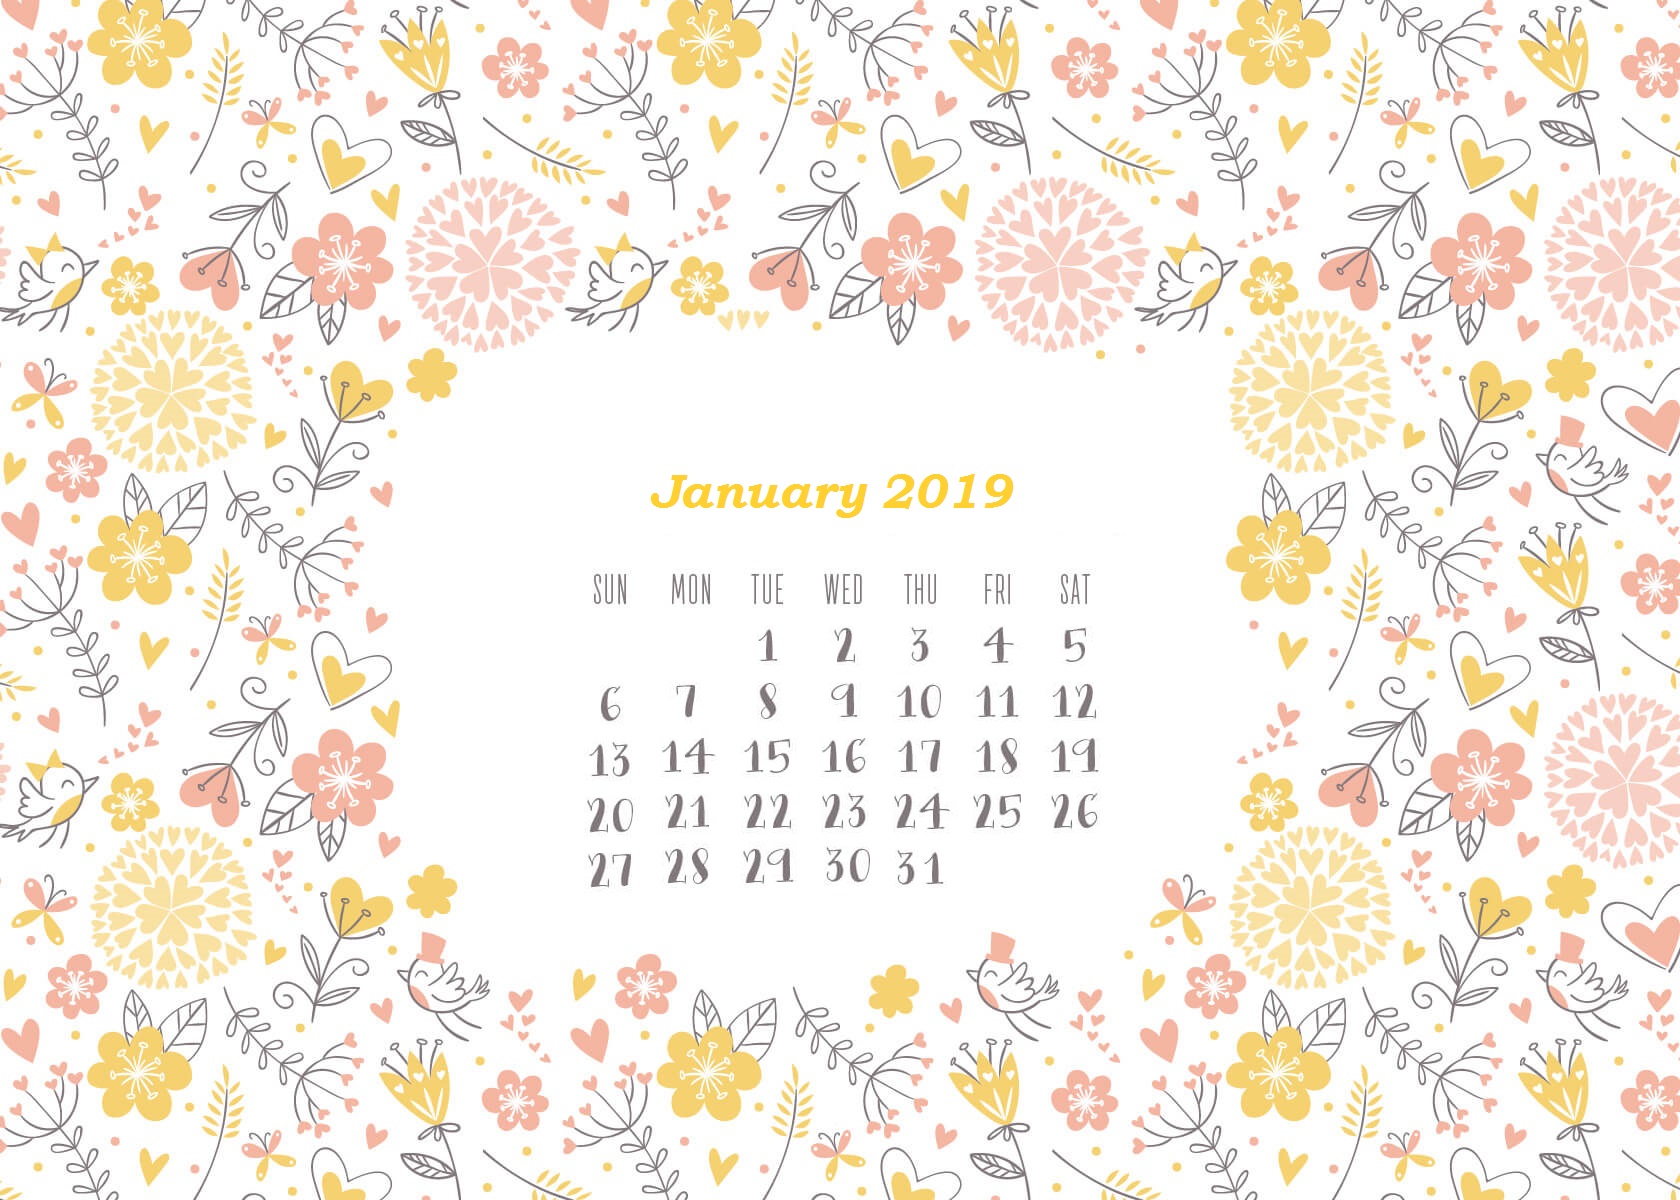 January 2019 HD Calendar Wallpapers Calendar 2019 1680x1200